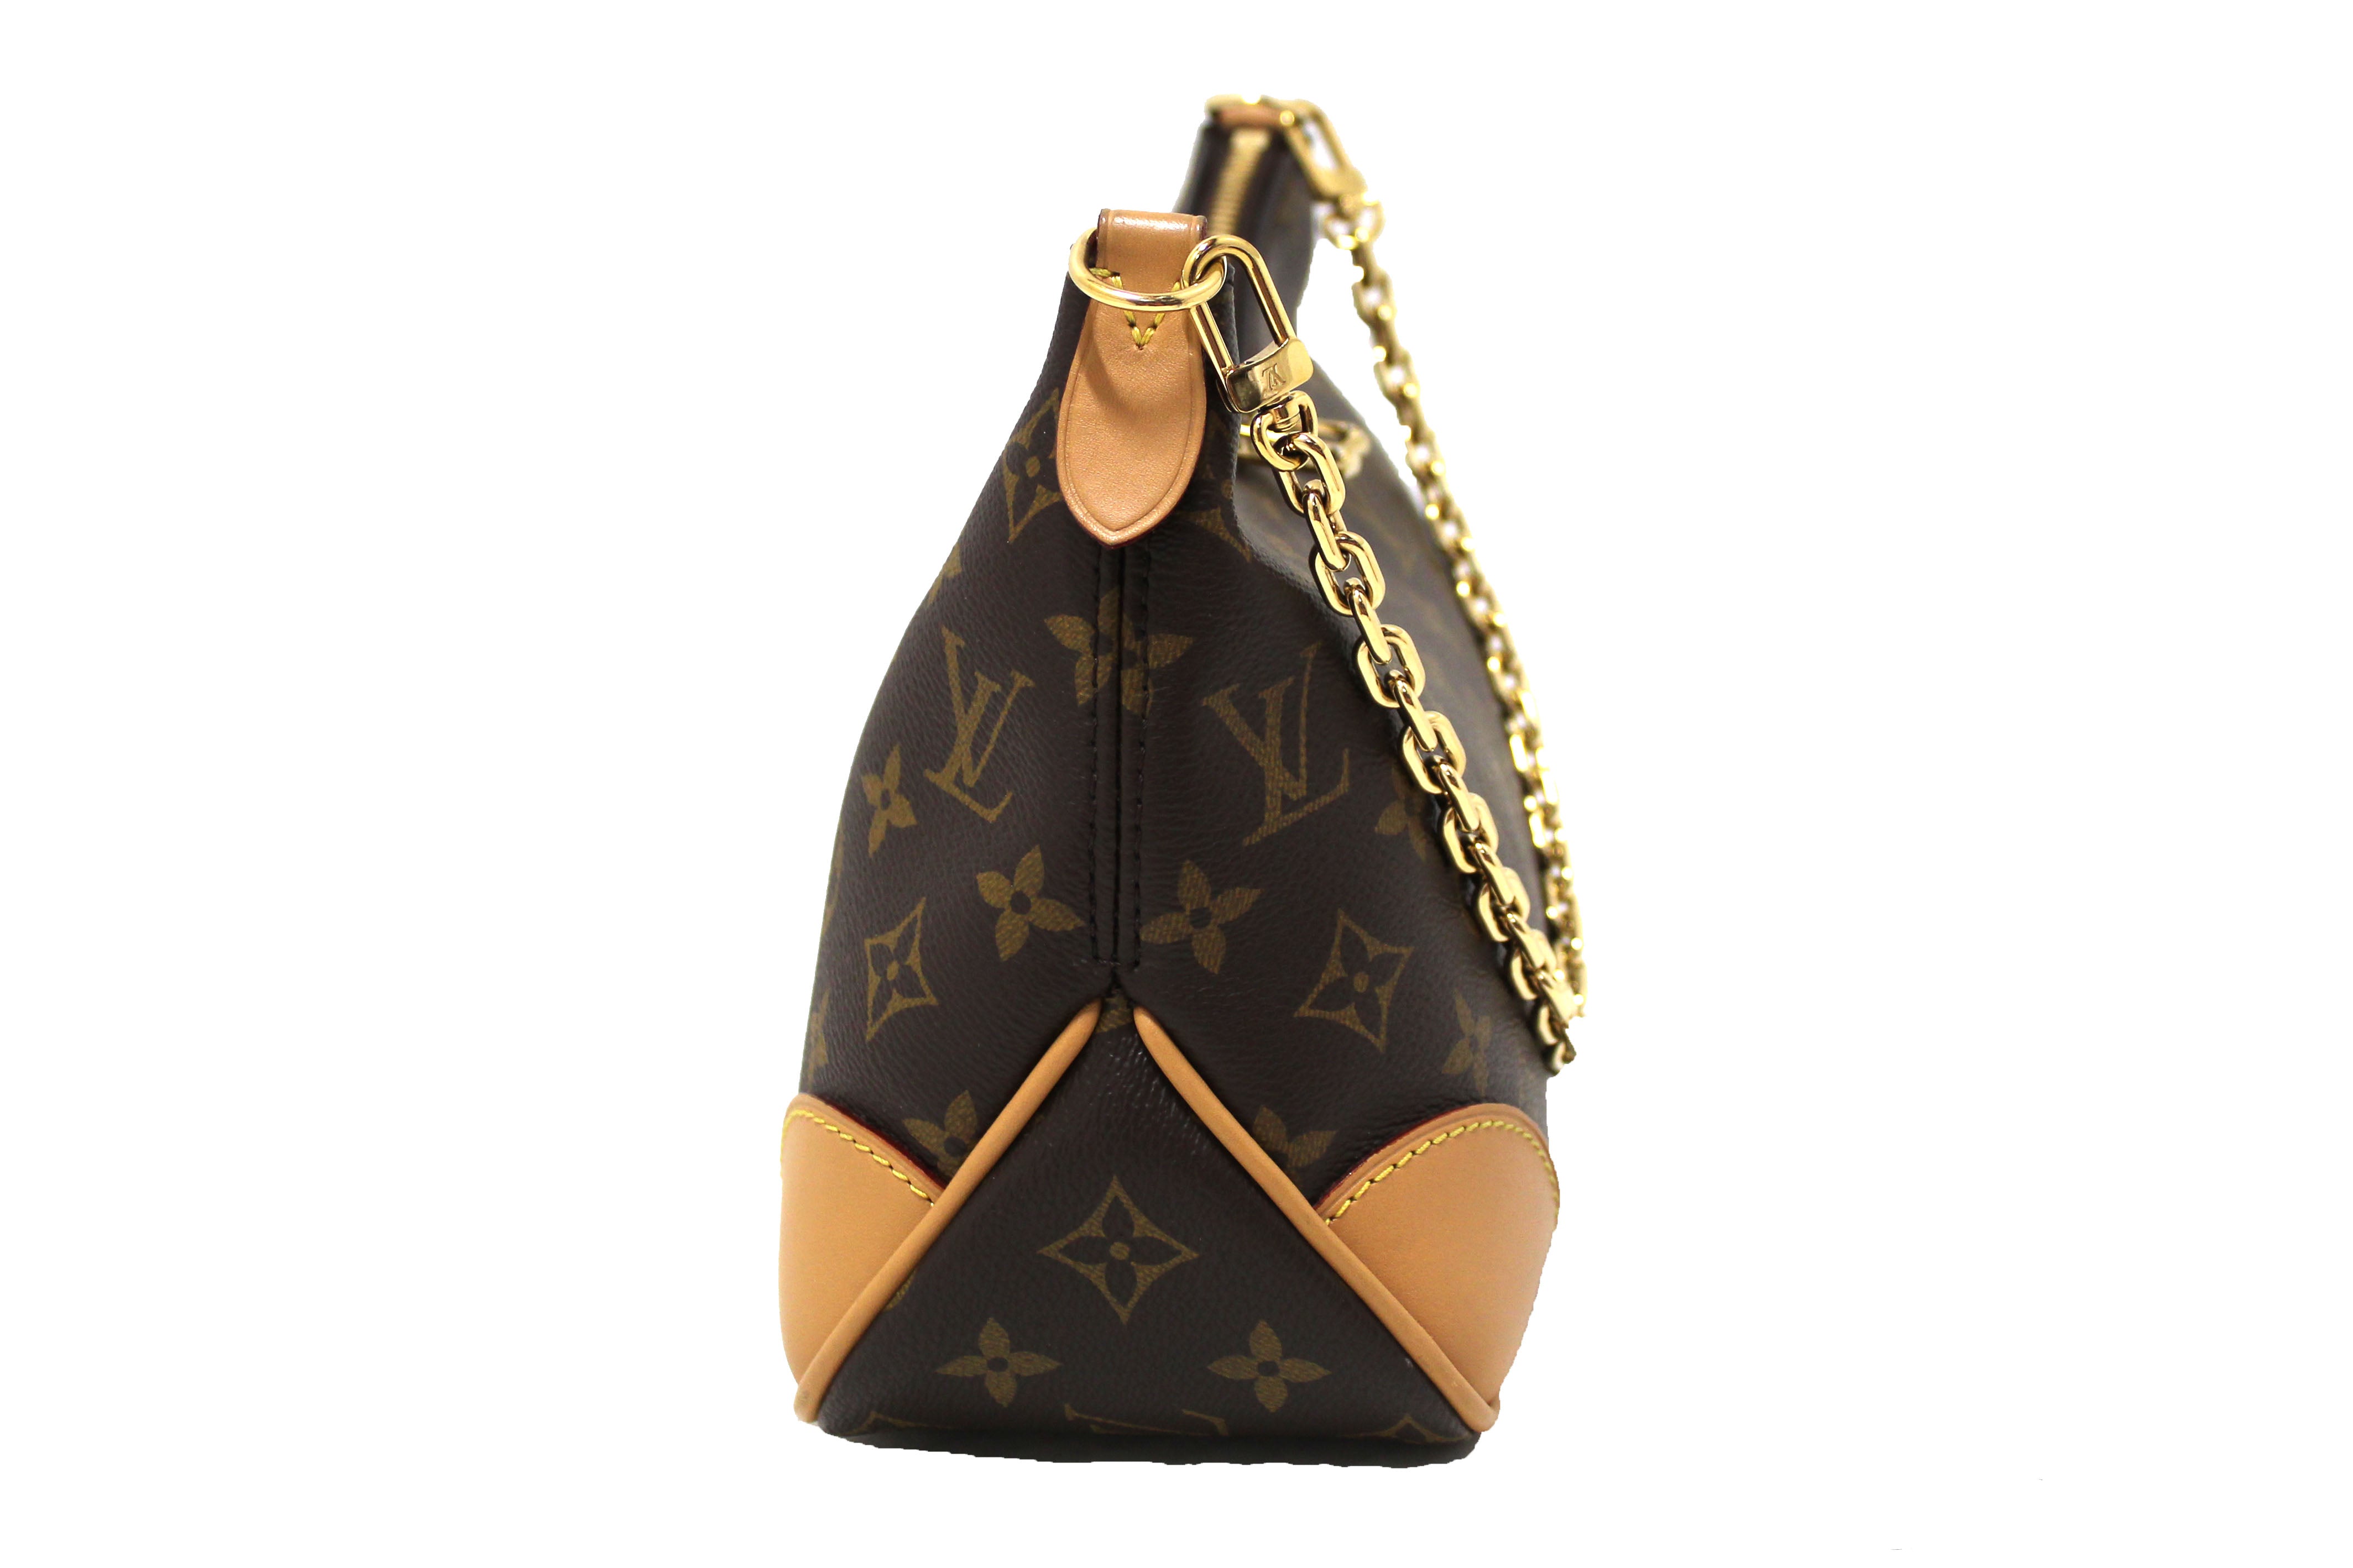 Boulogne leather crossbody bag